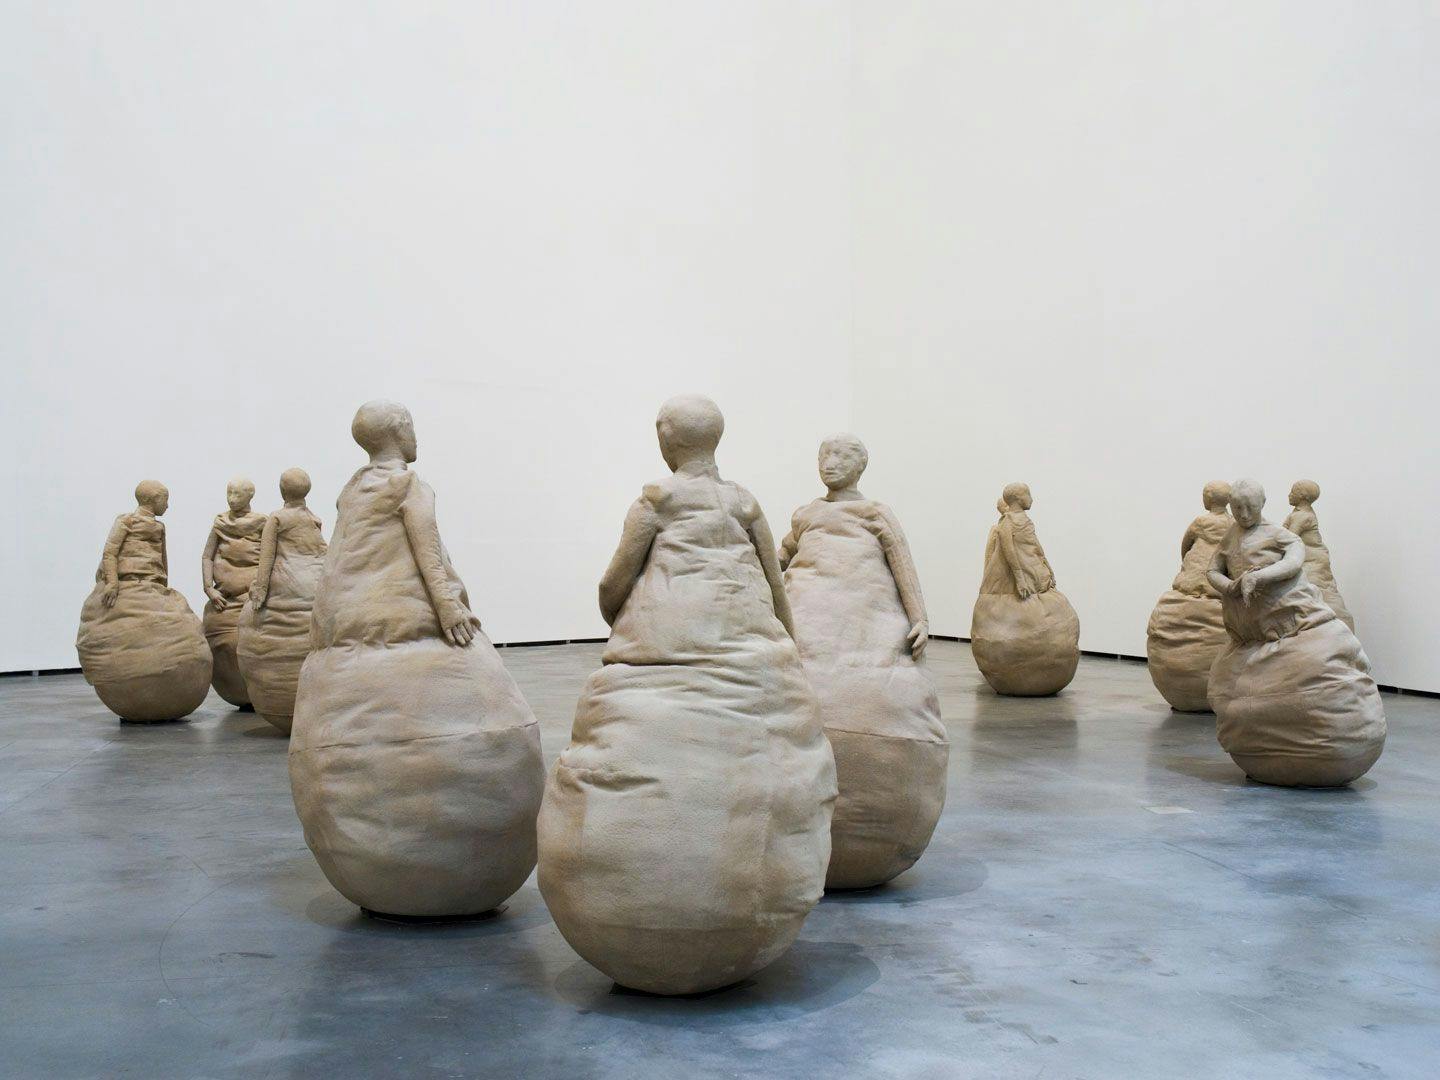 A mixed media sculptural installation by Juan Muñoz, titled Conversation Piece, Dublin, dated 1994, at Guggenheim Bilbao Museoa, in Bilbao, Spain, in 2008.